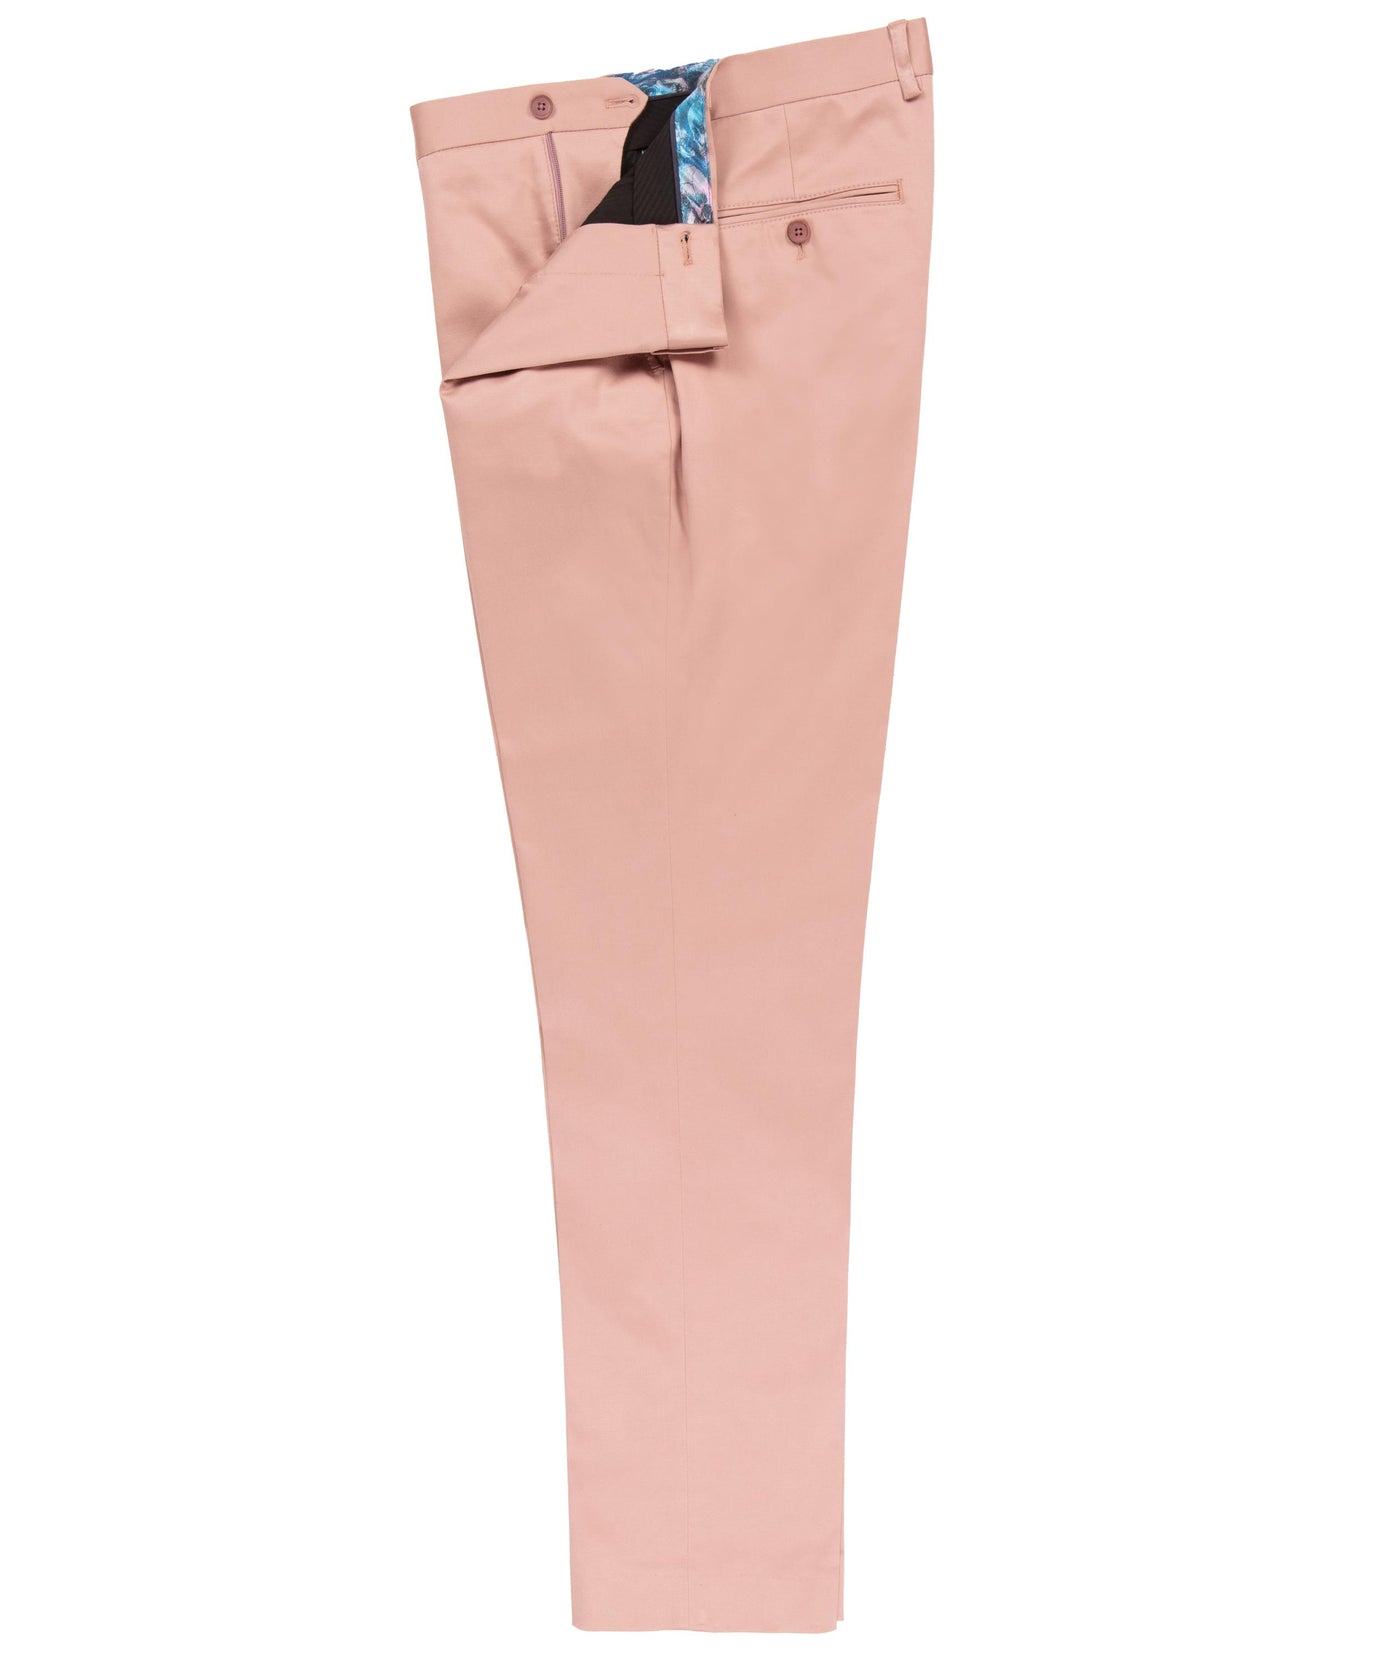 Tencel blend Smooth Texture Trouser